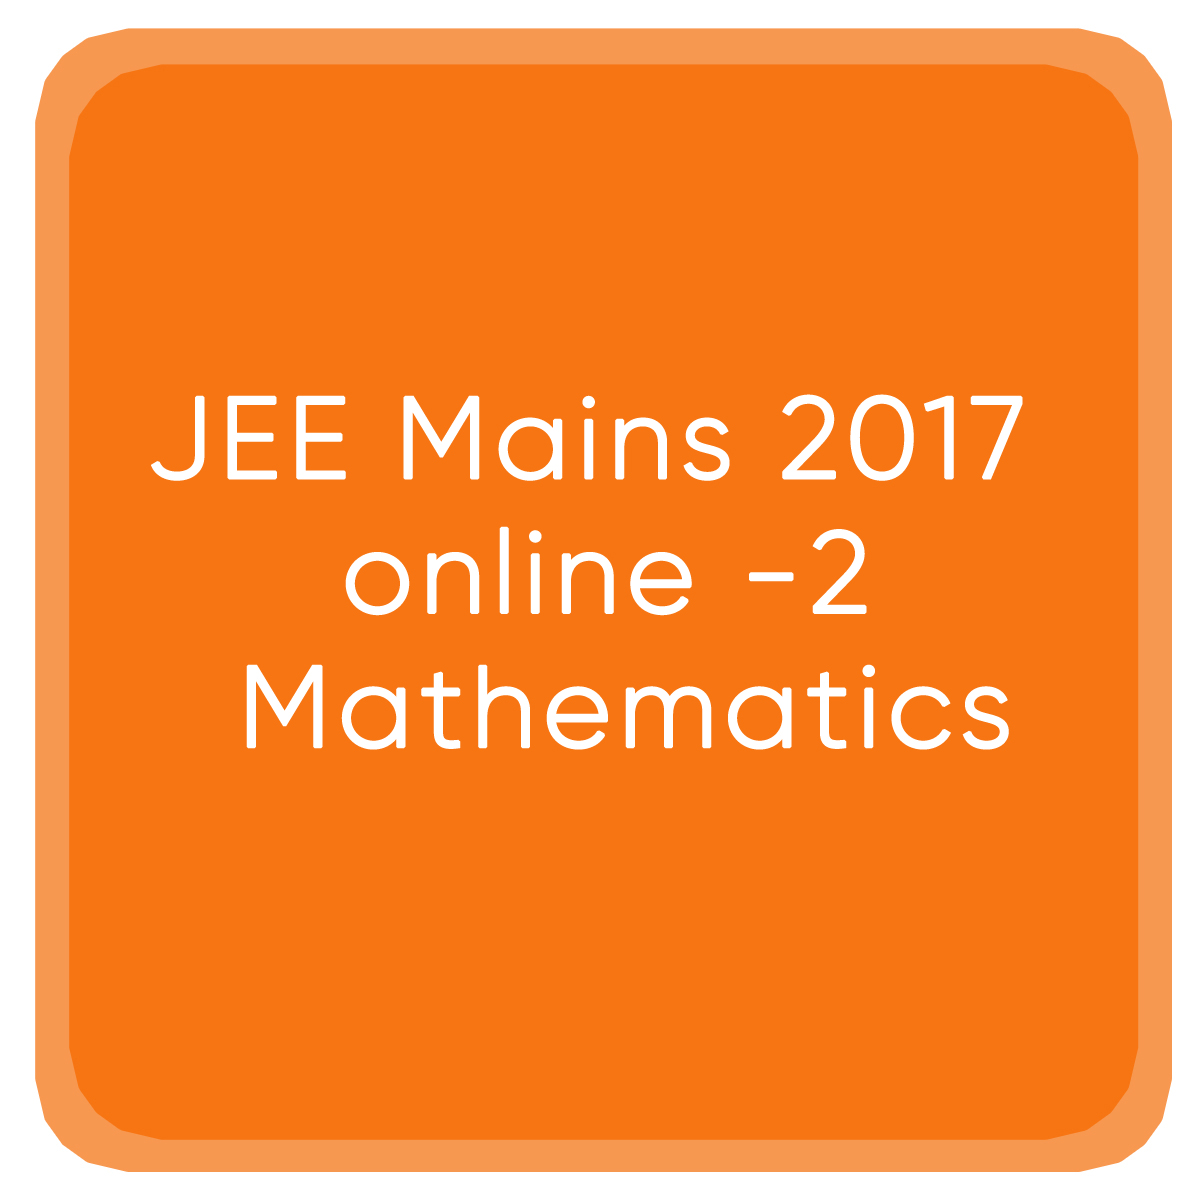 JEE Mains 2017 online -2 Mathematics